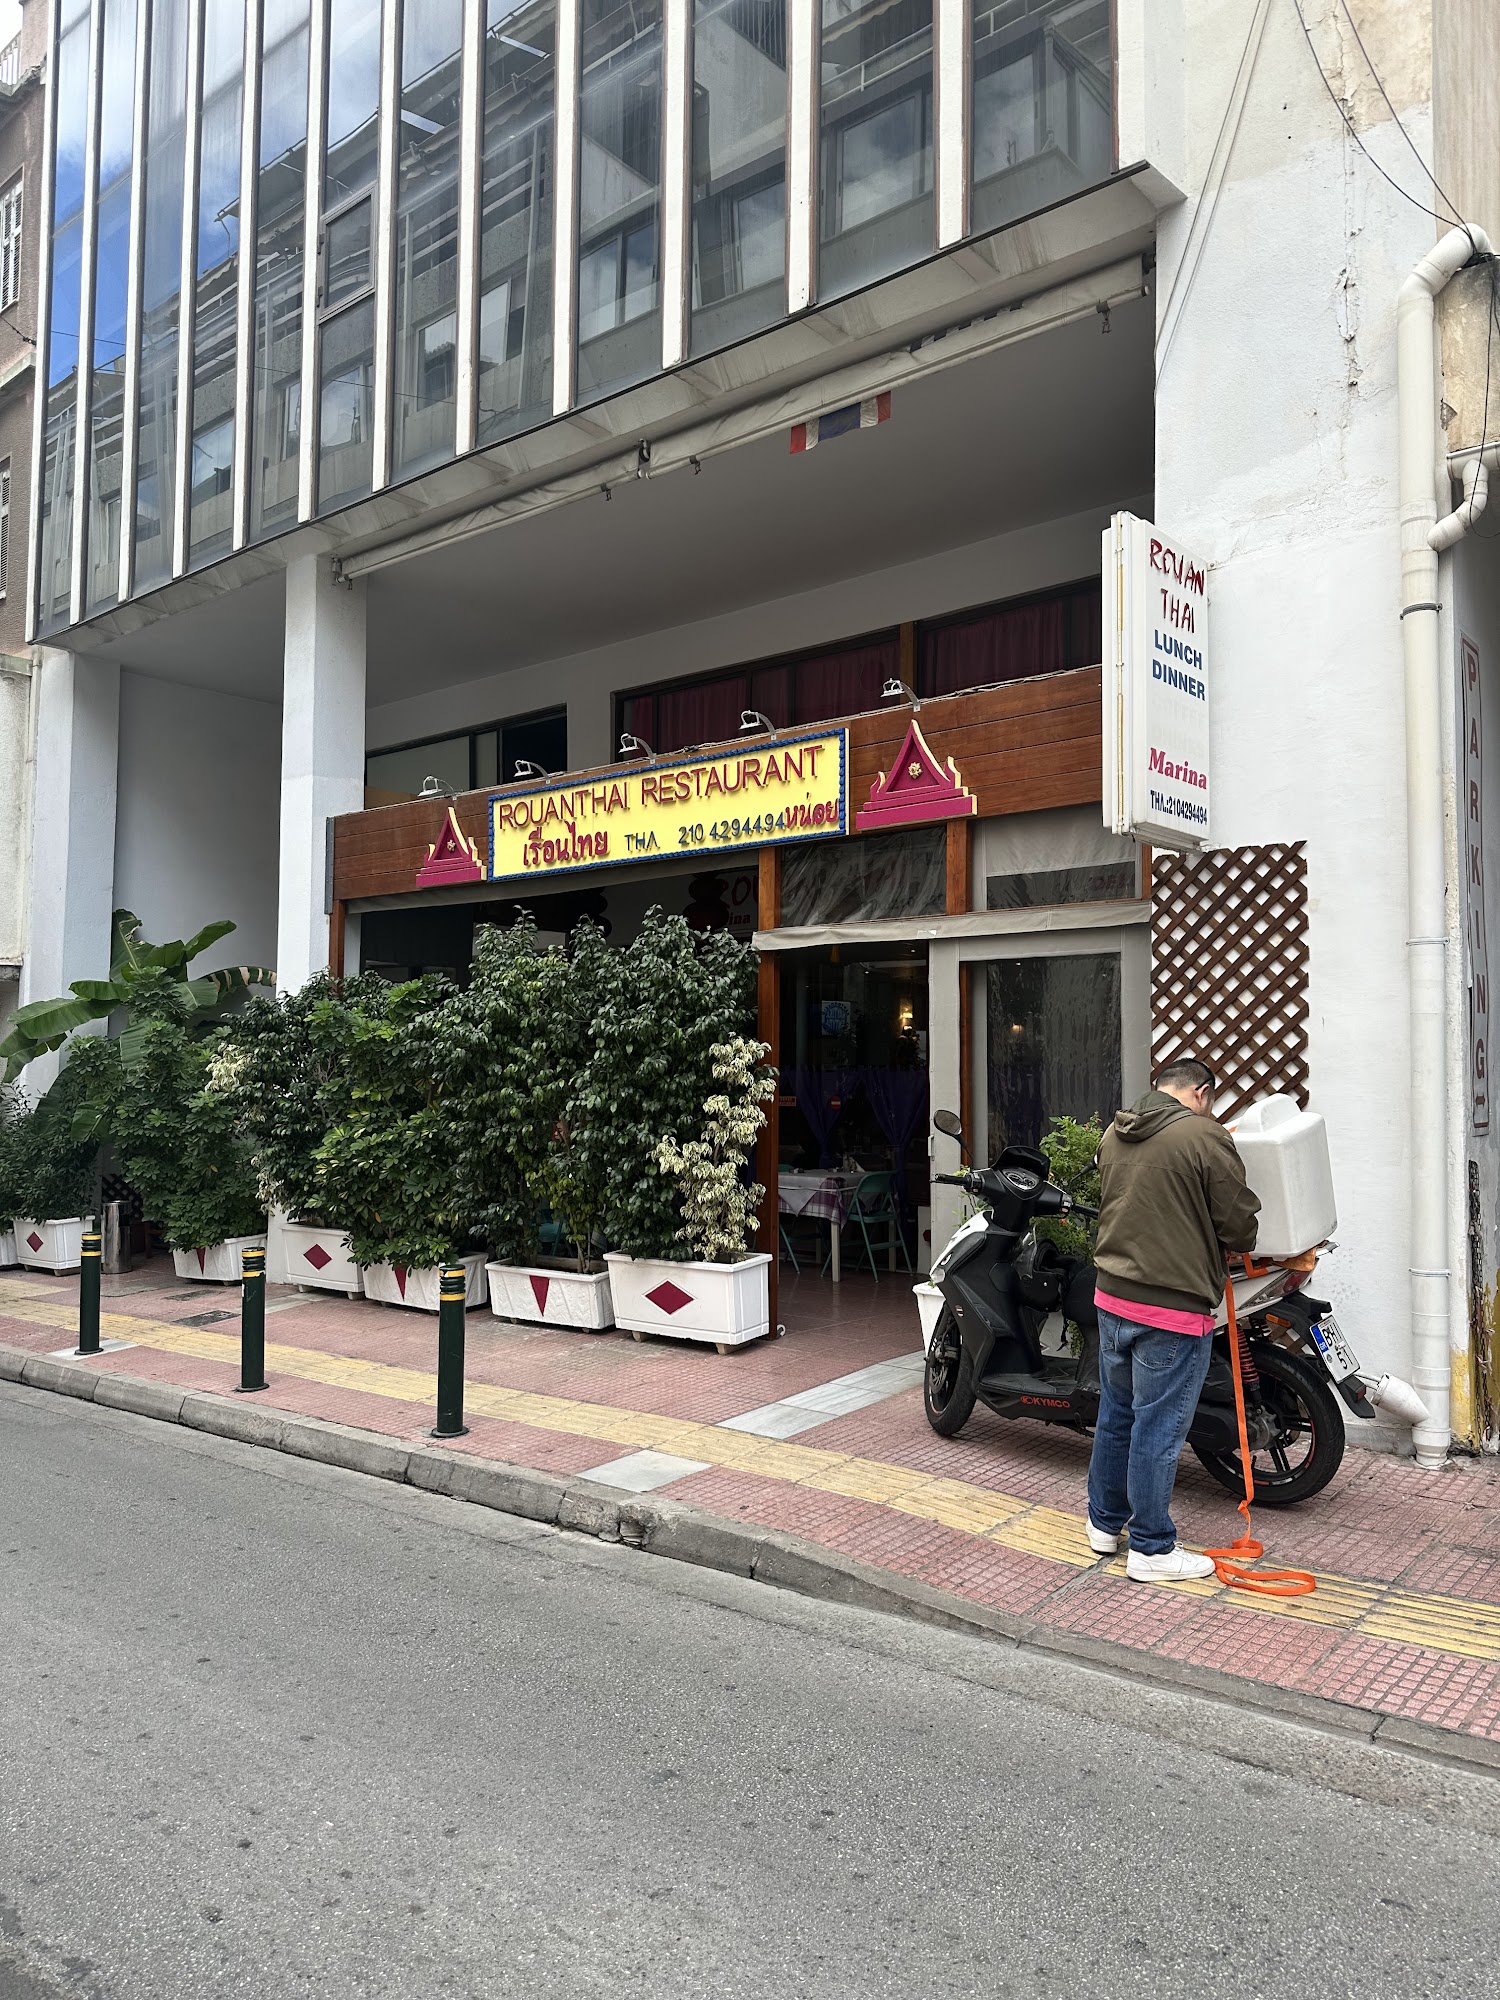 Rouen Thai Restaurant